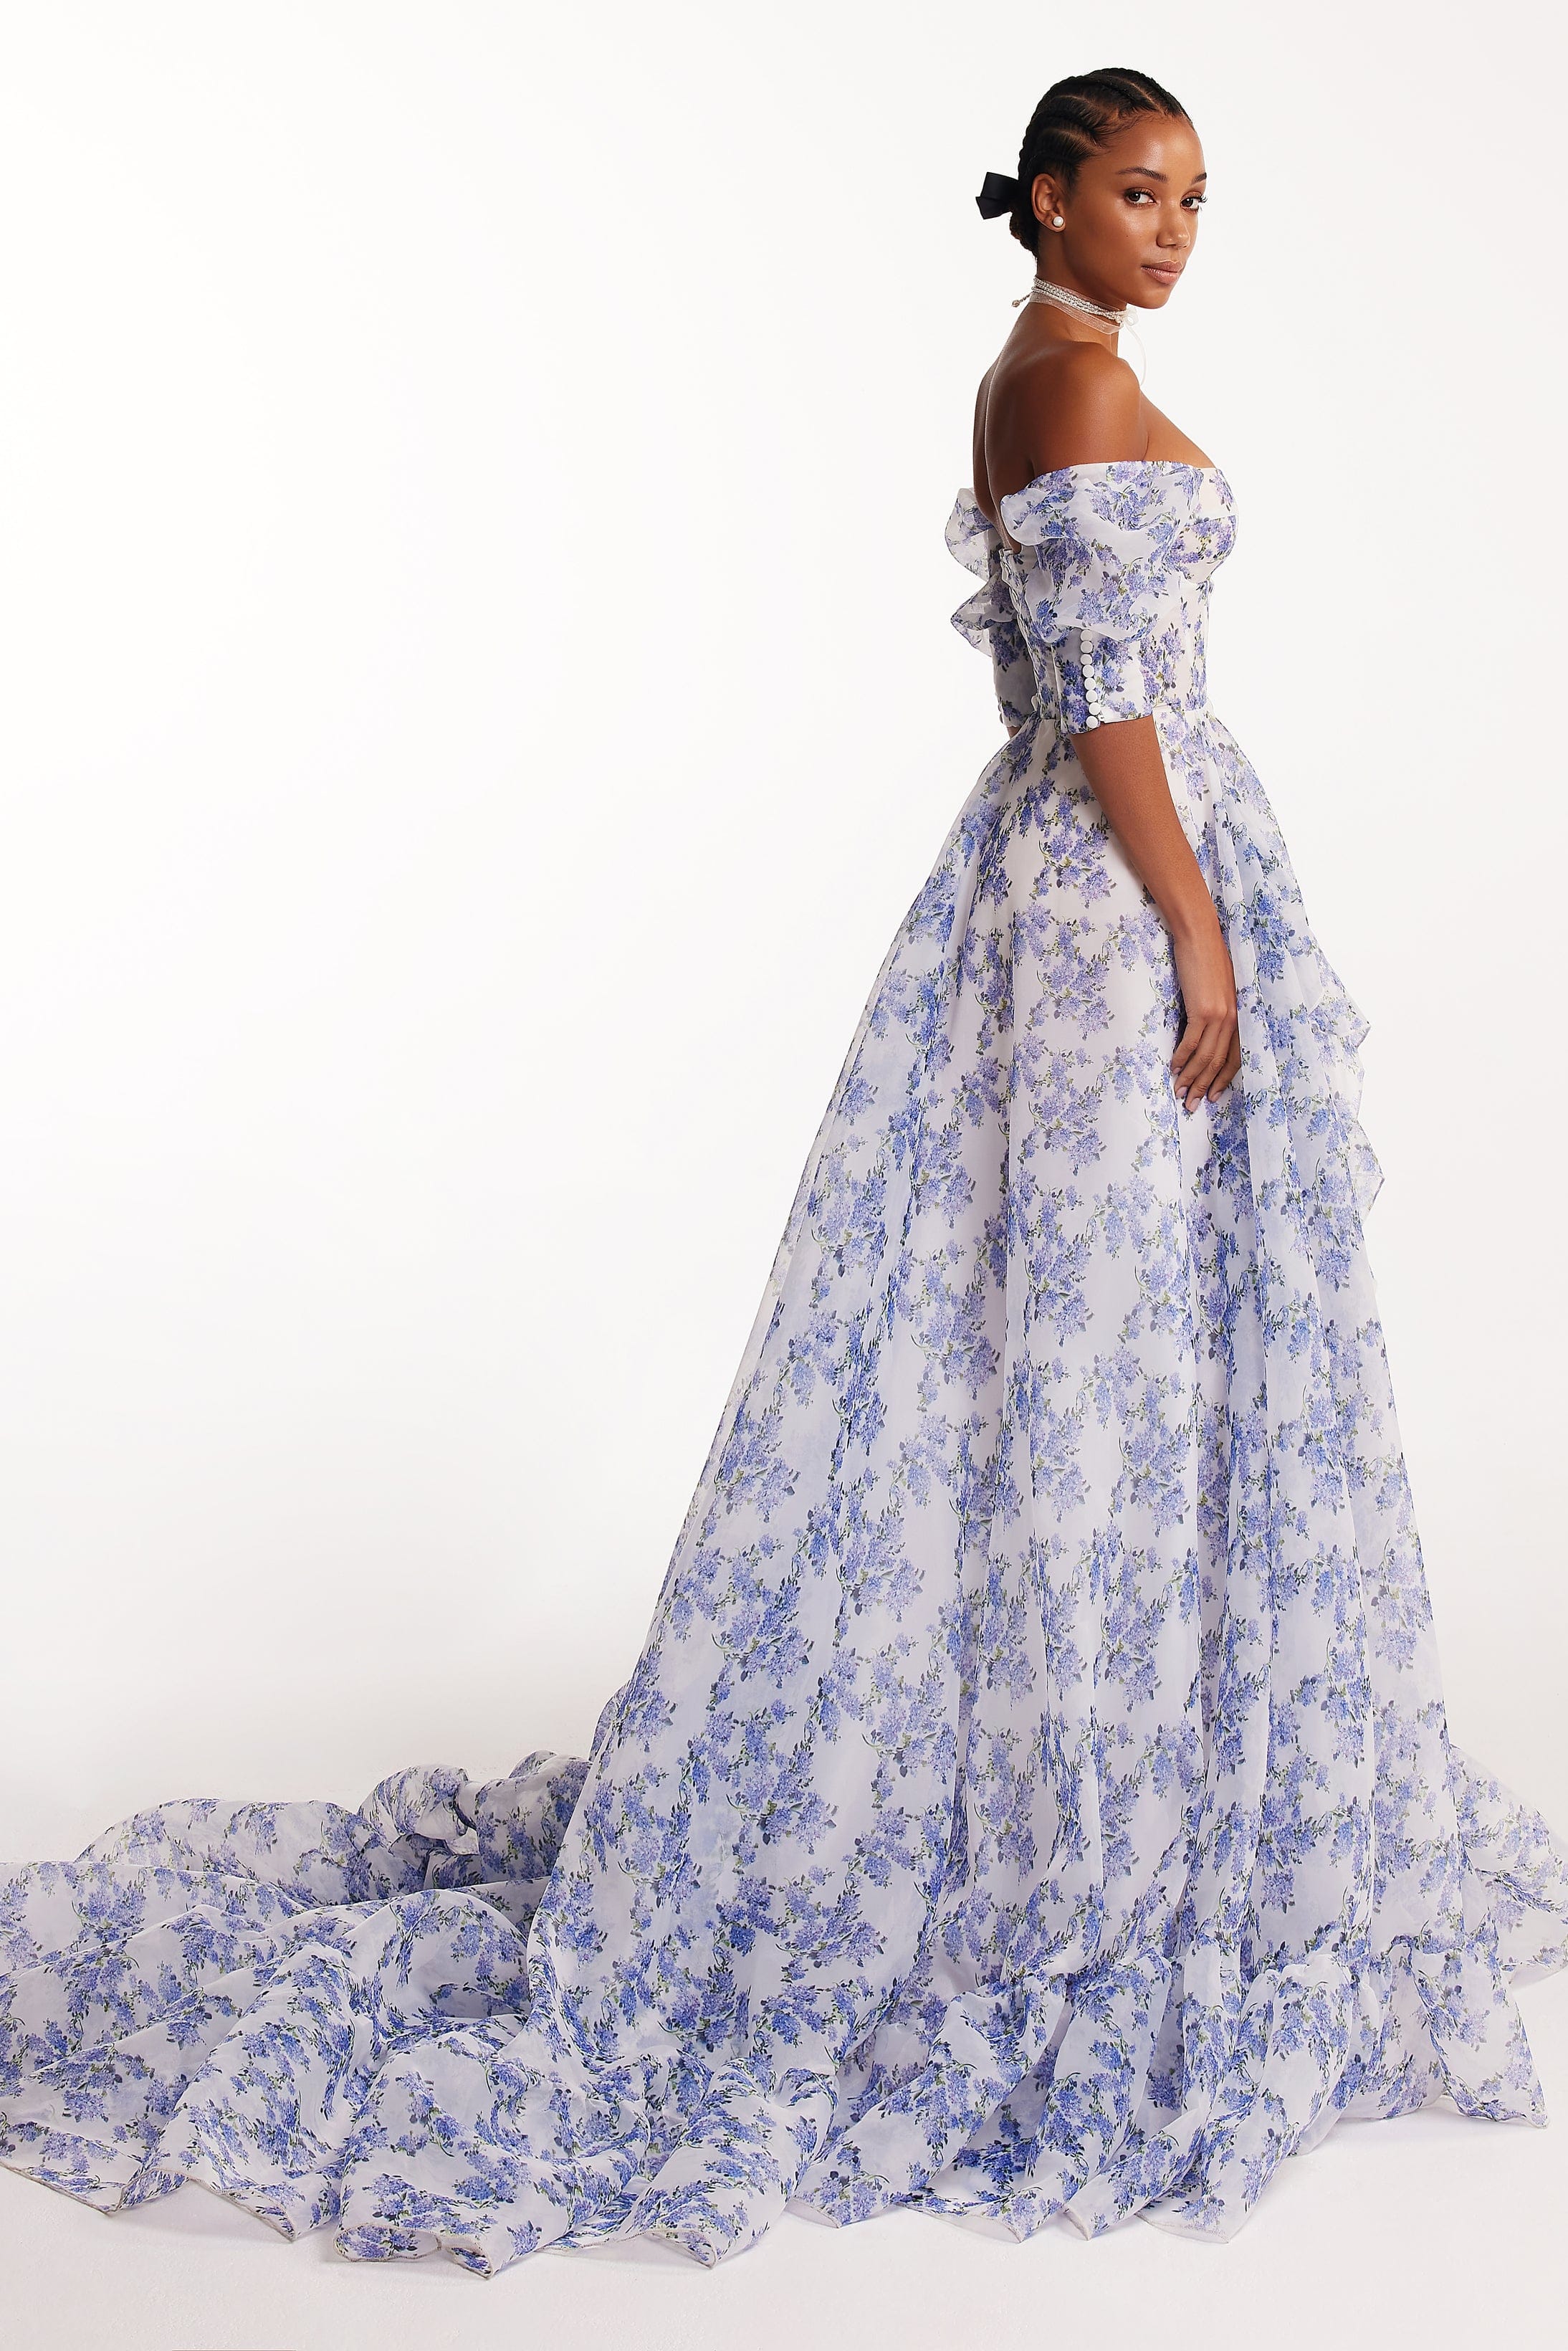 Shop Blue Hydrangea maxi princess dress from Milla at Seezona 